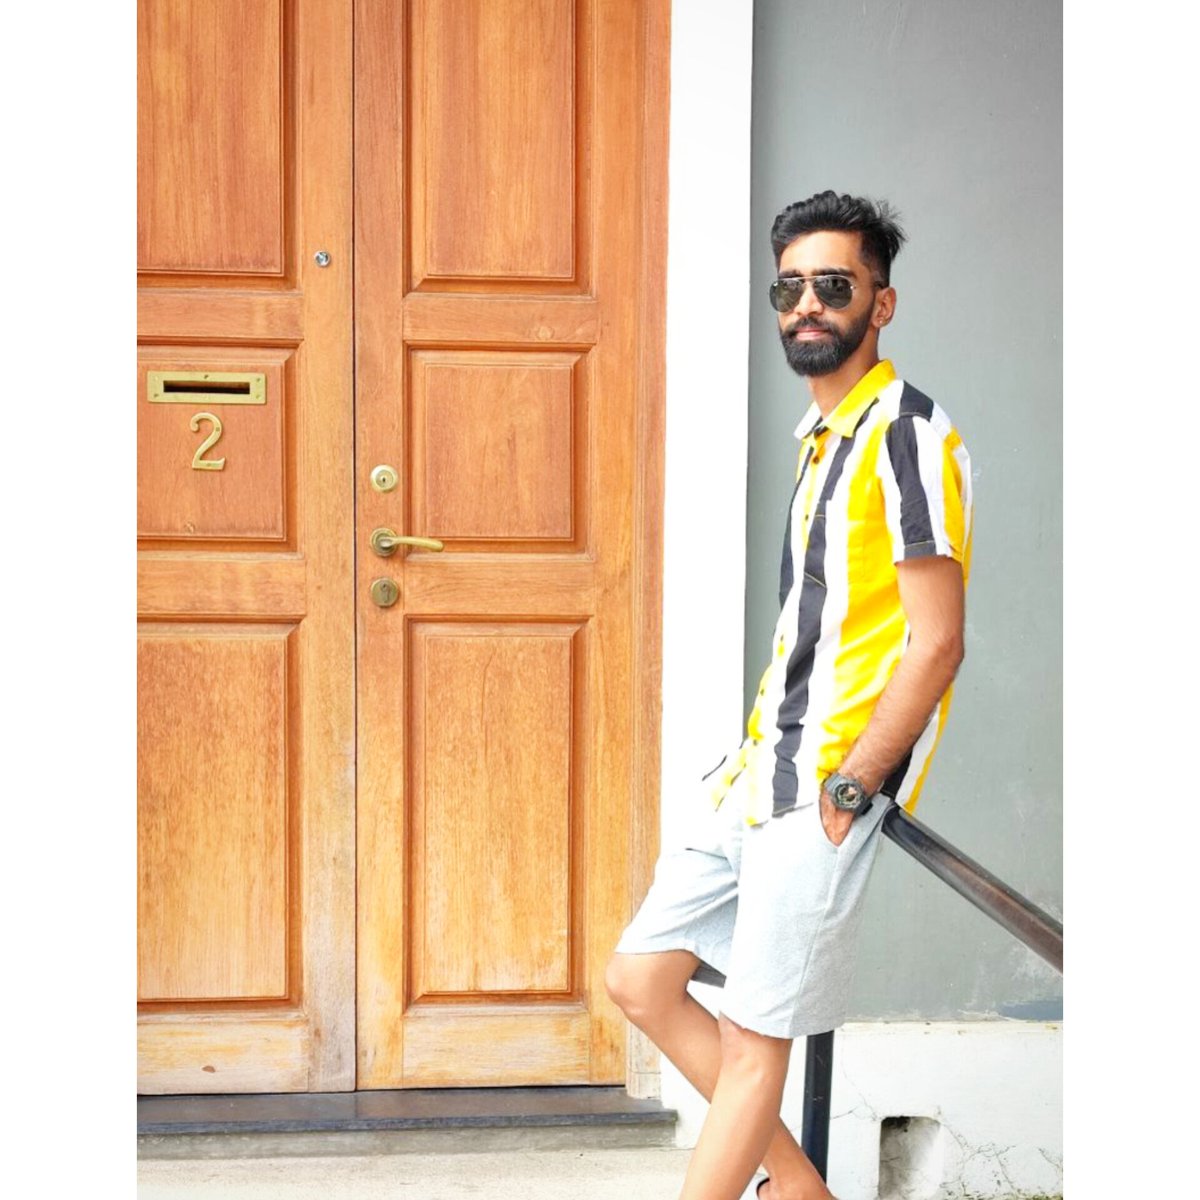 Act the way that you want to feel.
.
.
.
.
#pondicherry #chennai #pondicherrydiaries #puducherry #pondy #TamilNadu #kerala #Indian #photography #pondydiaries #tamil #love #pondicherrytourism #salem #auroville #pondicherrybeach #rockbeach #beach #cuddalore #instagram #fashion